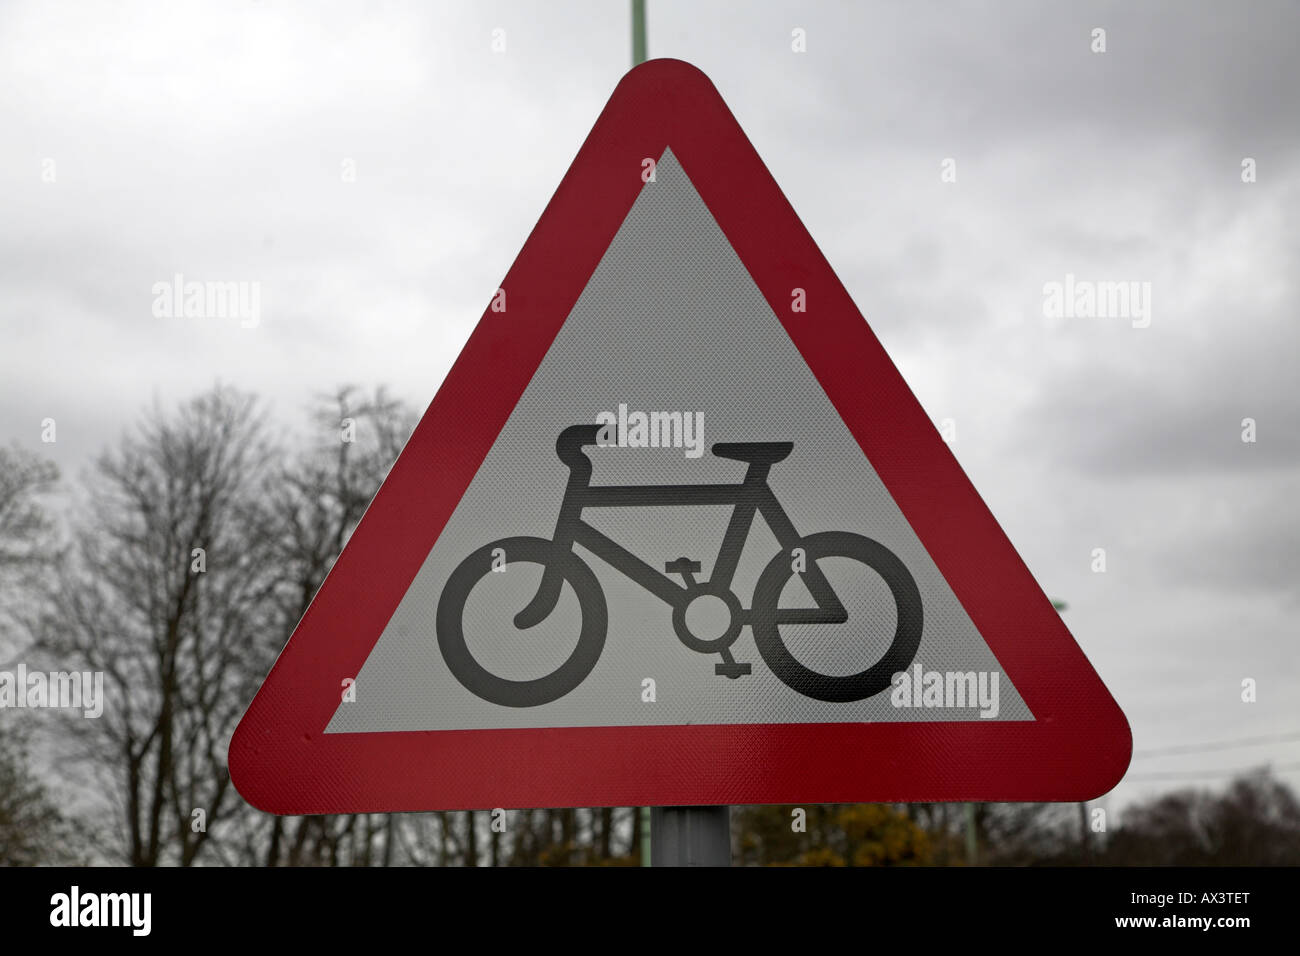 Rote dreieckige Schild auf dem Fahrrad Stockfotografie - Alamy